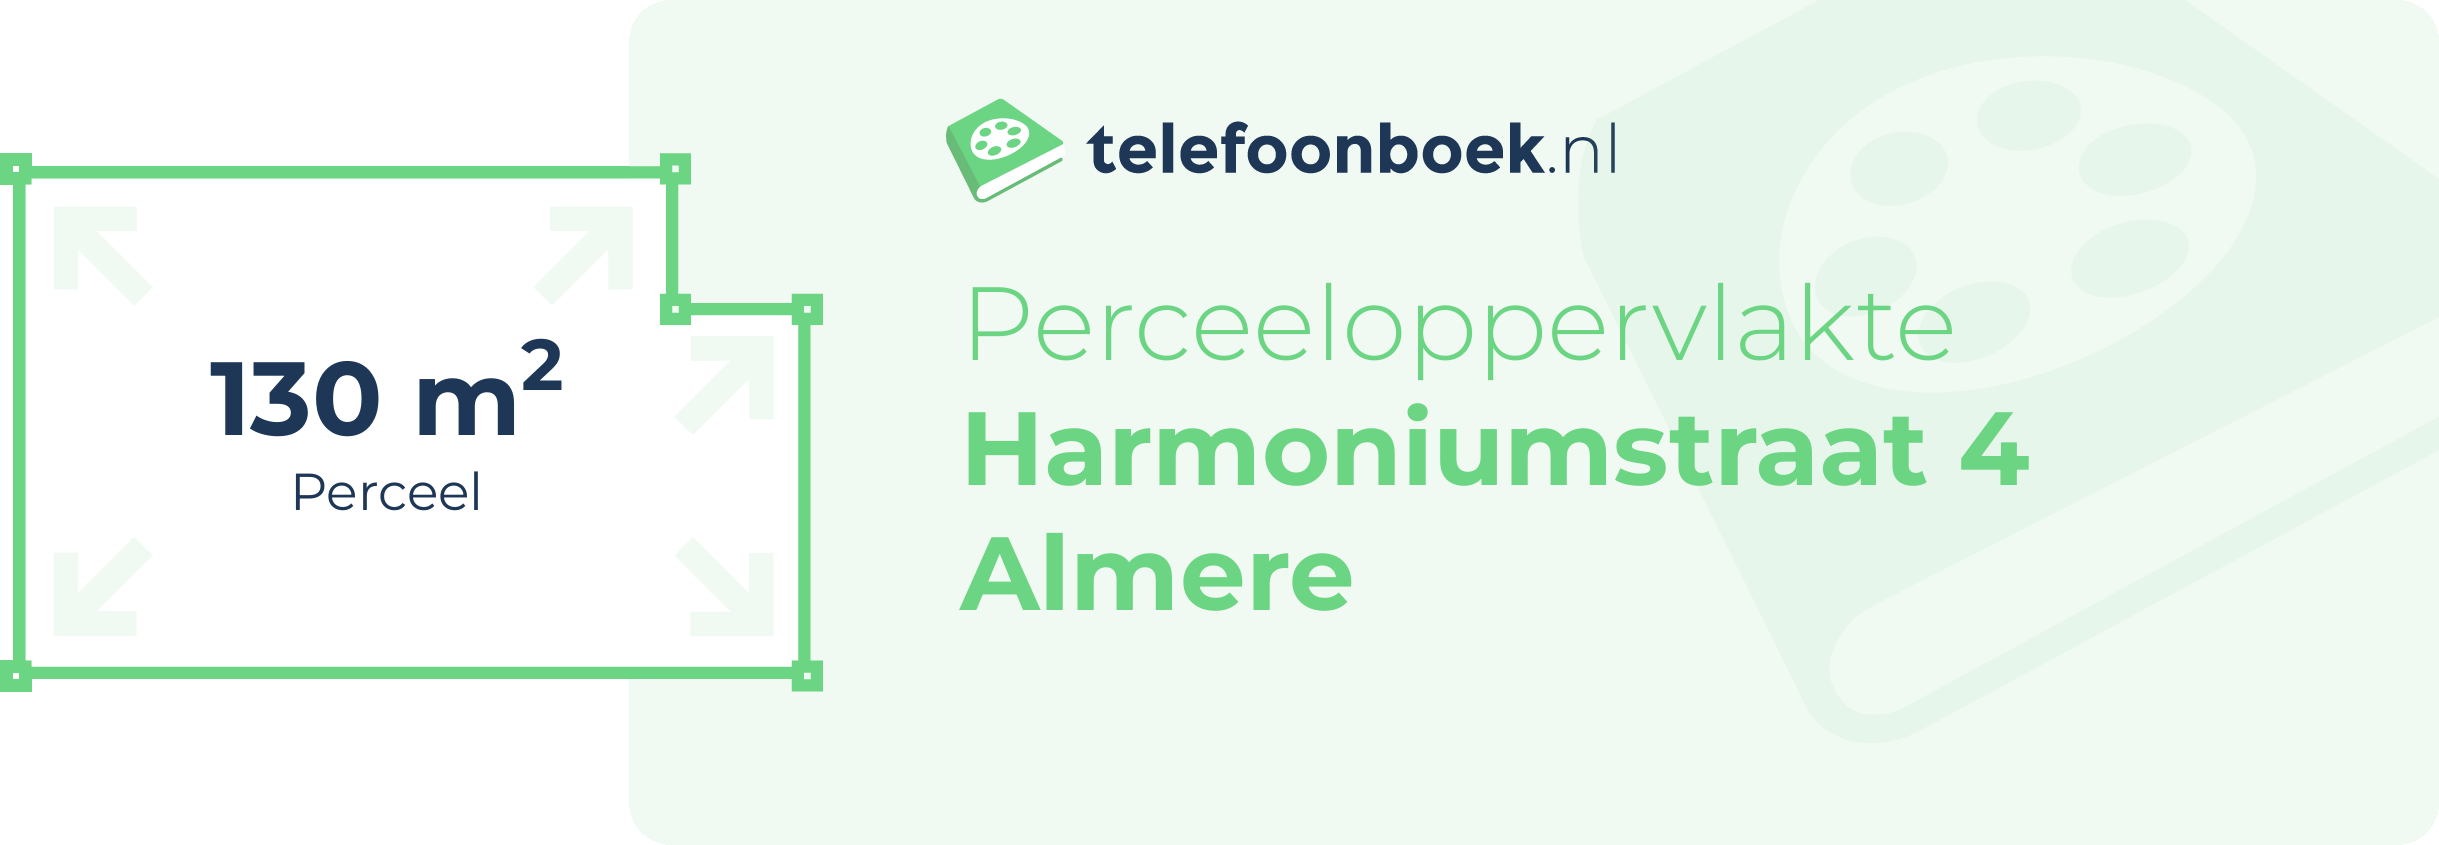 Perceeloppervlakte Harmoniumstraat 4 Almere